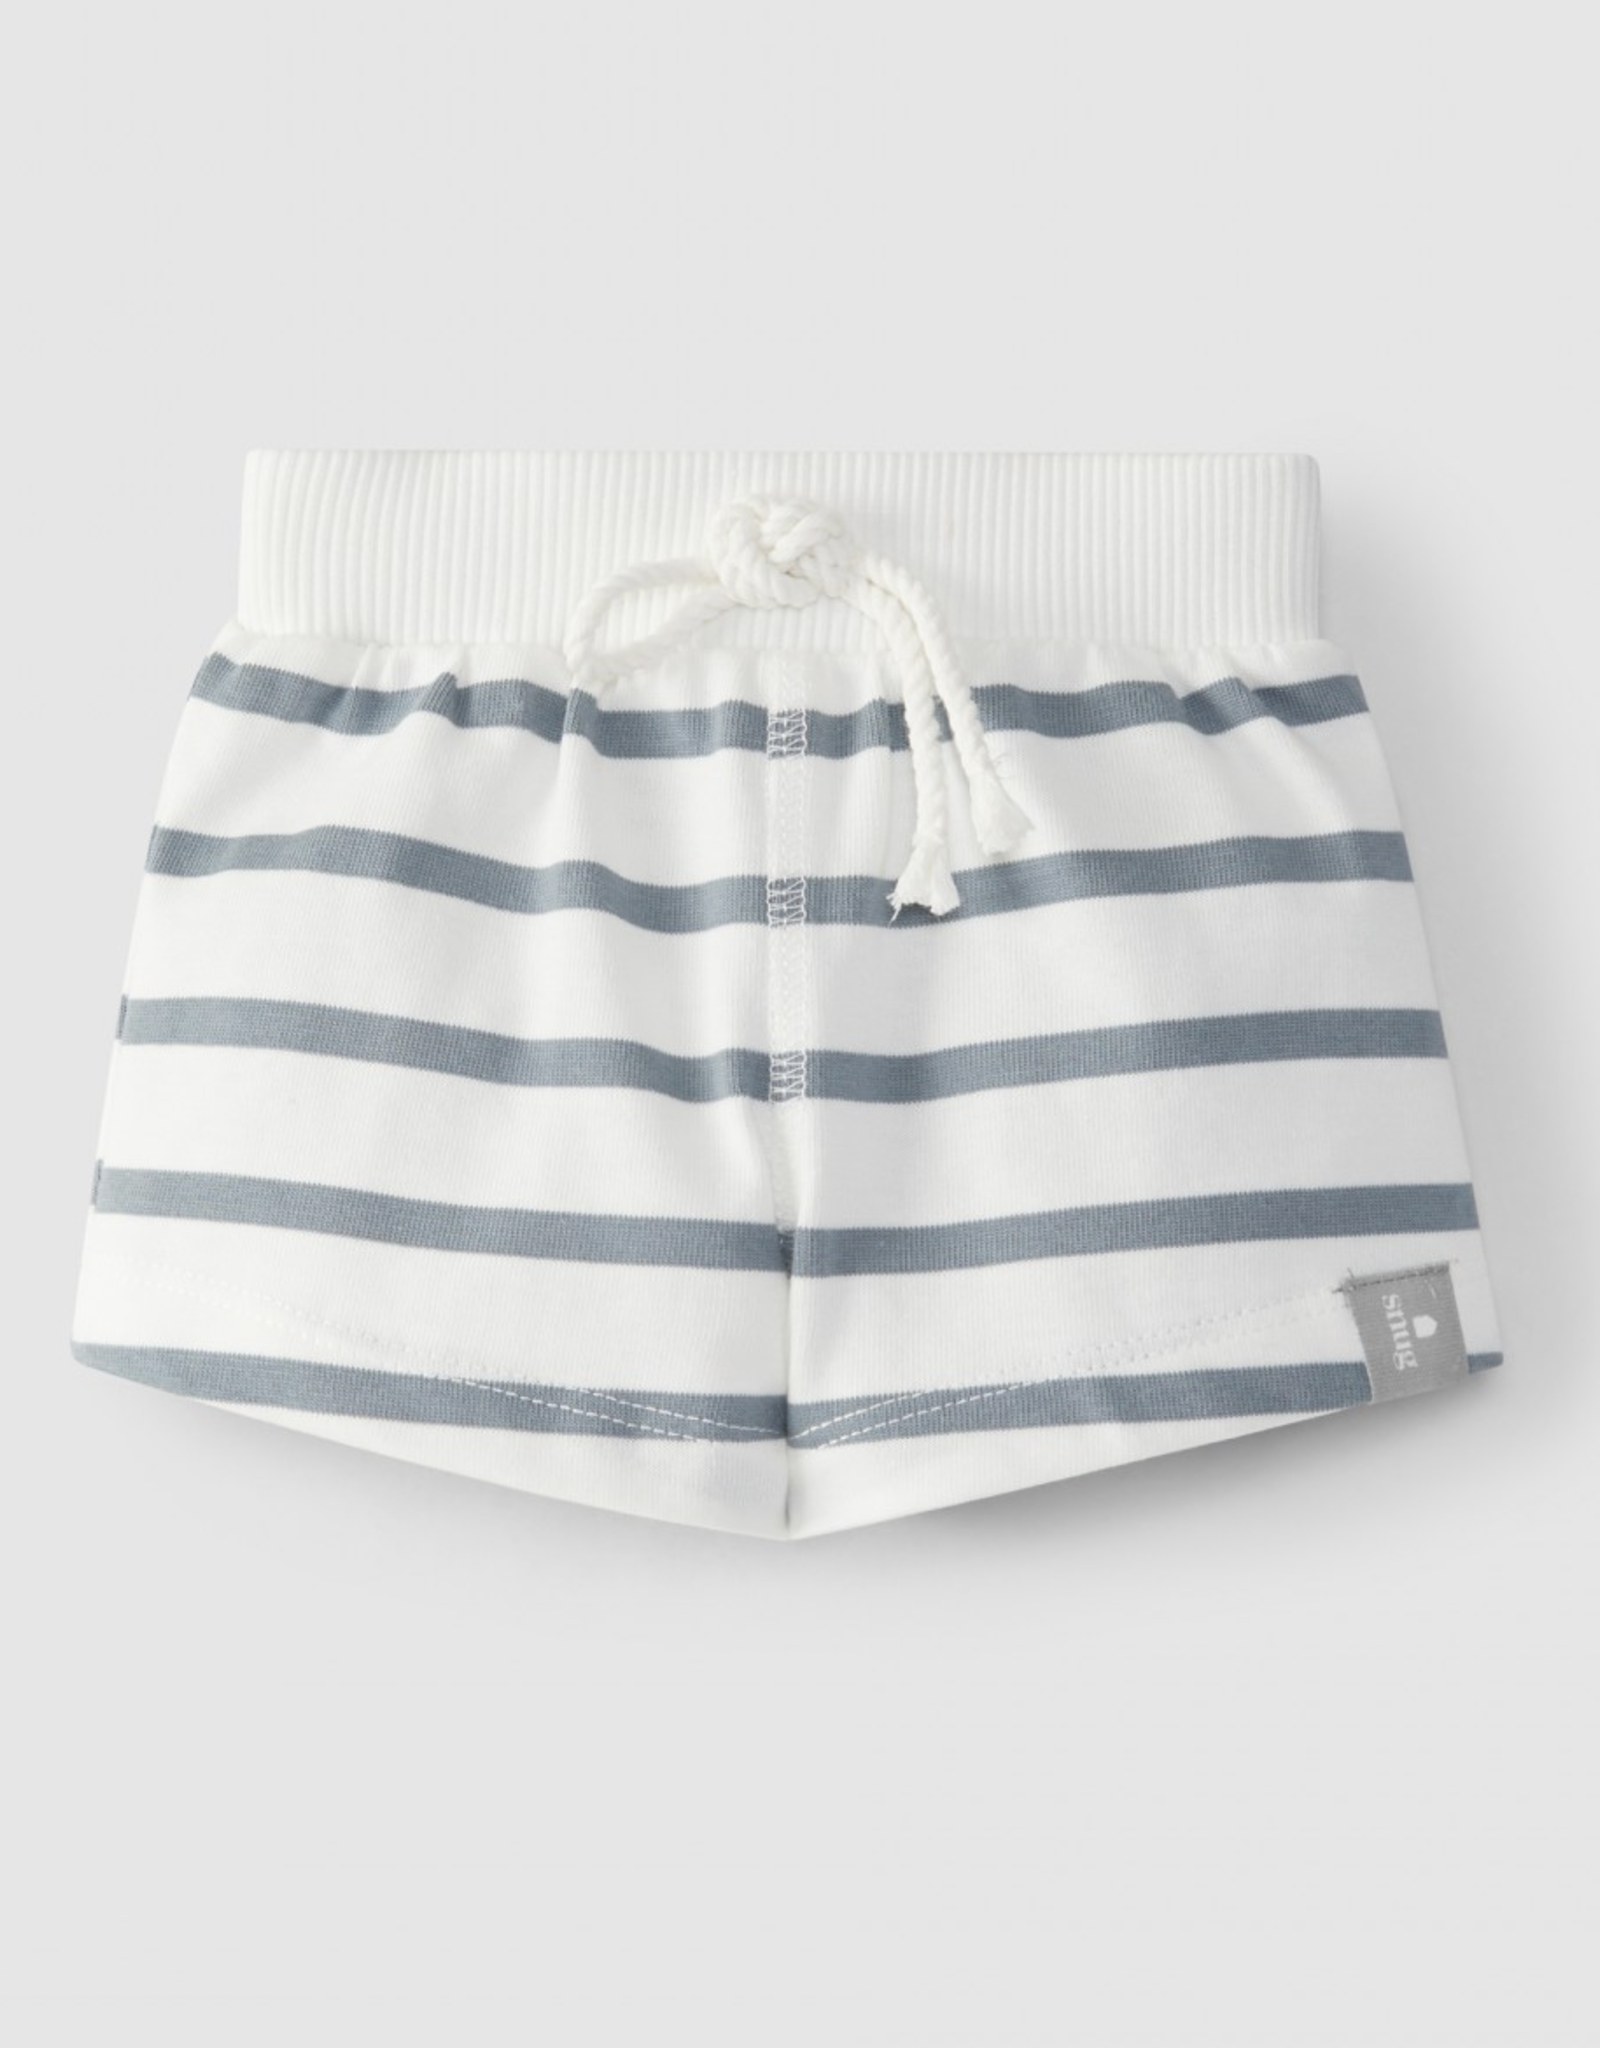 Snug indigo stripe shorts